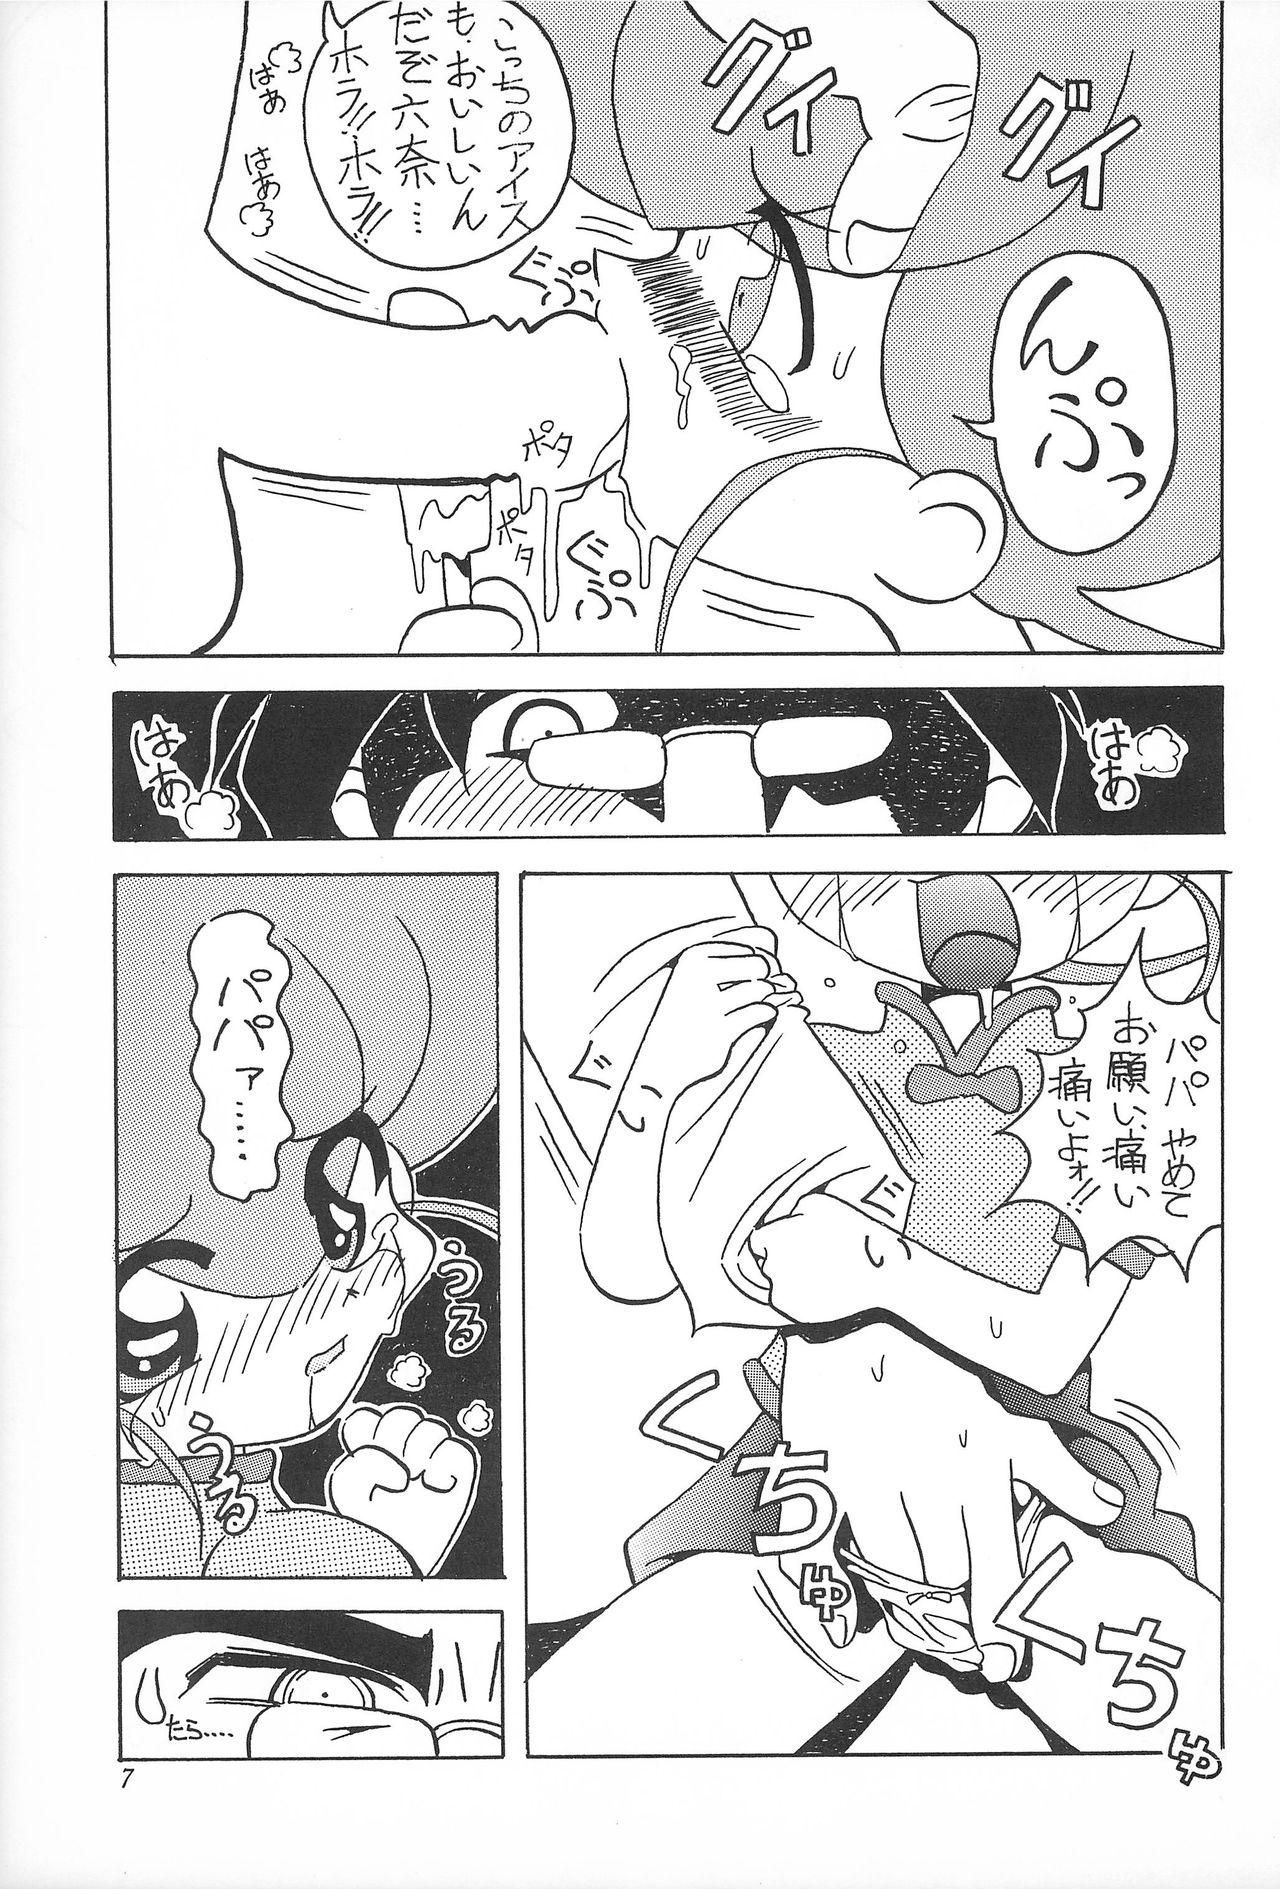 Kinky Rokushin Gattai - Magewappa 13 - Mon colle knights Polla - Page 8